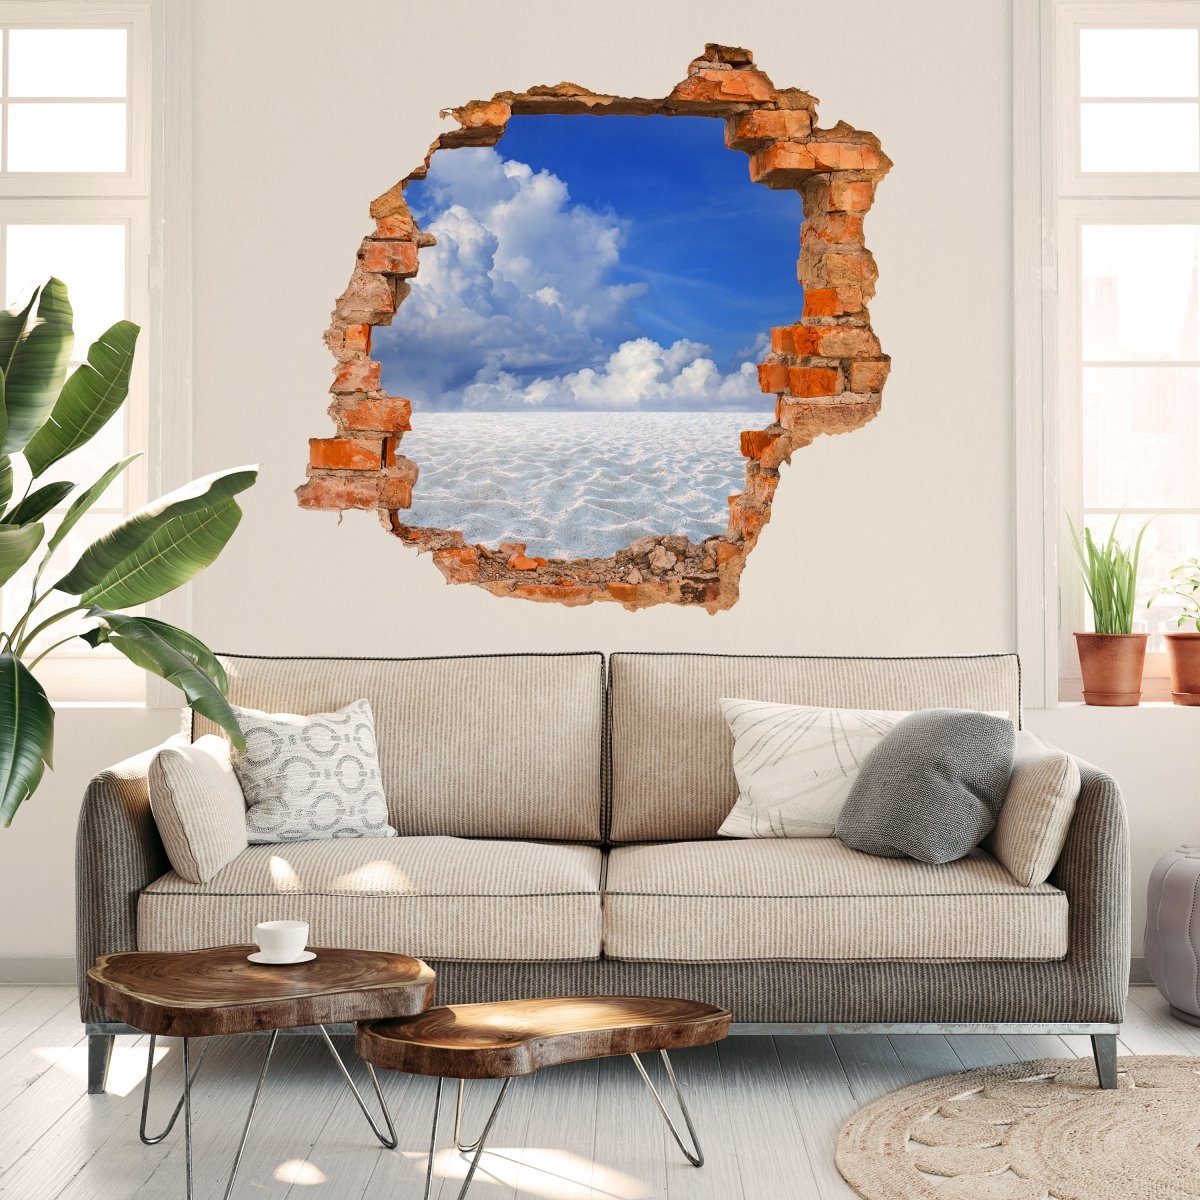 Sticker mural 3D Paysage de sable avec un ciel bleu - Sticker mural M0891